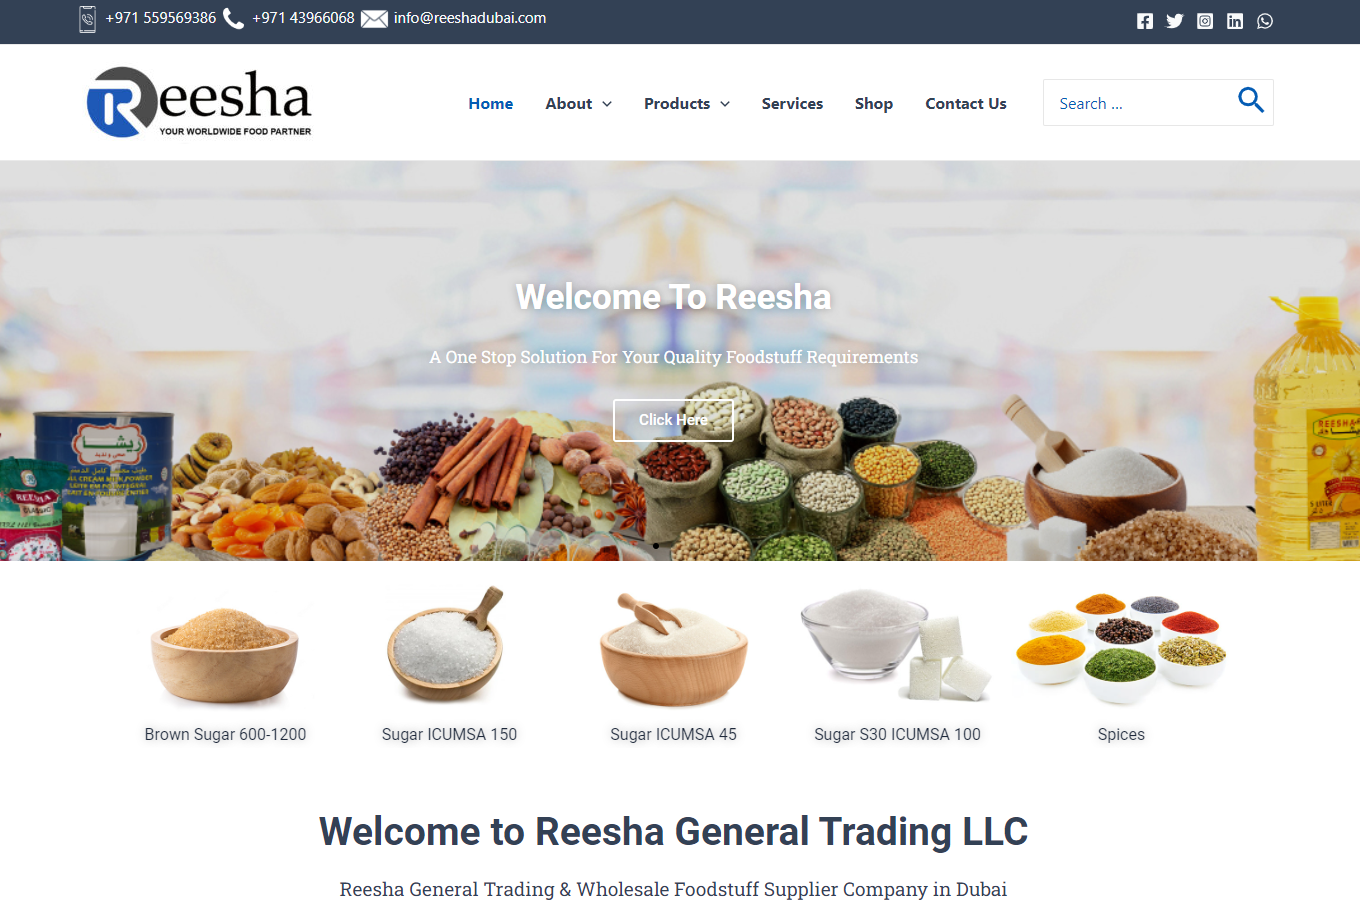 Reesha General Trading